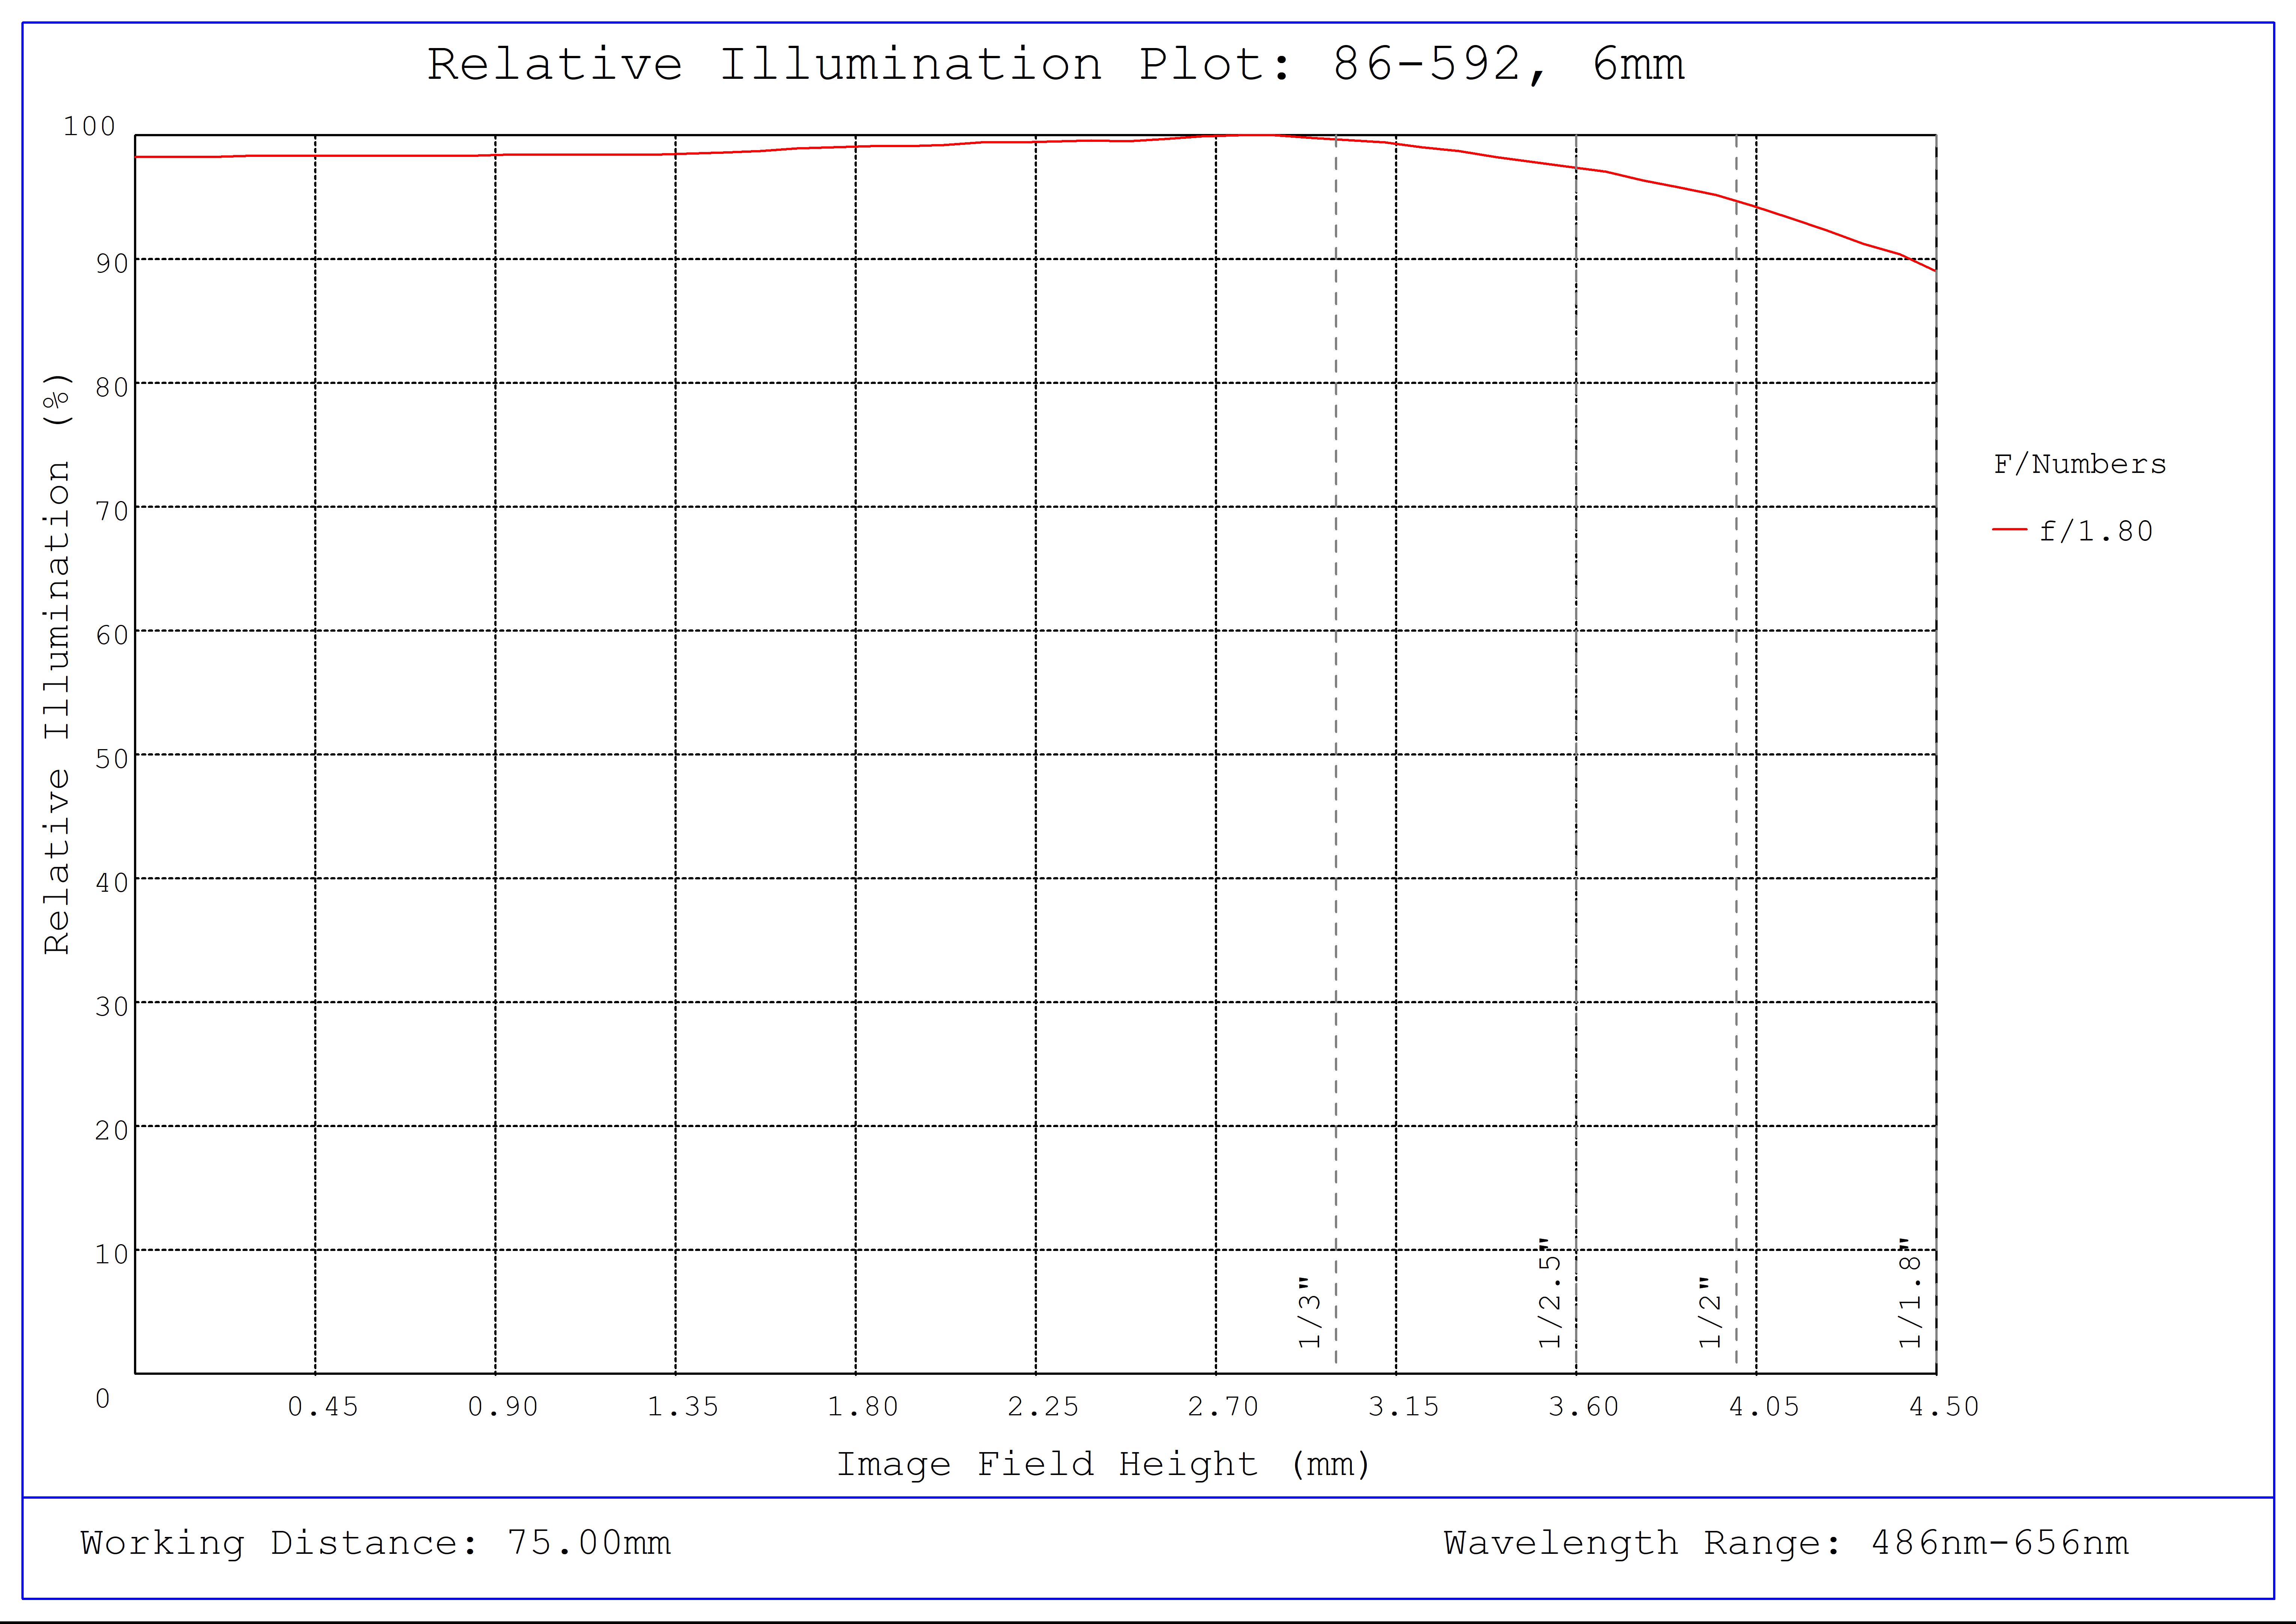 #86-592, 6mm, f/1.8 Ci Series Fixed Focal Length Lens, Relative Illumination Plot